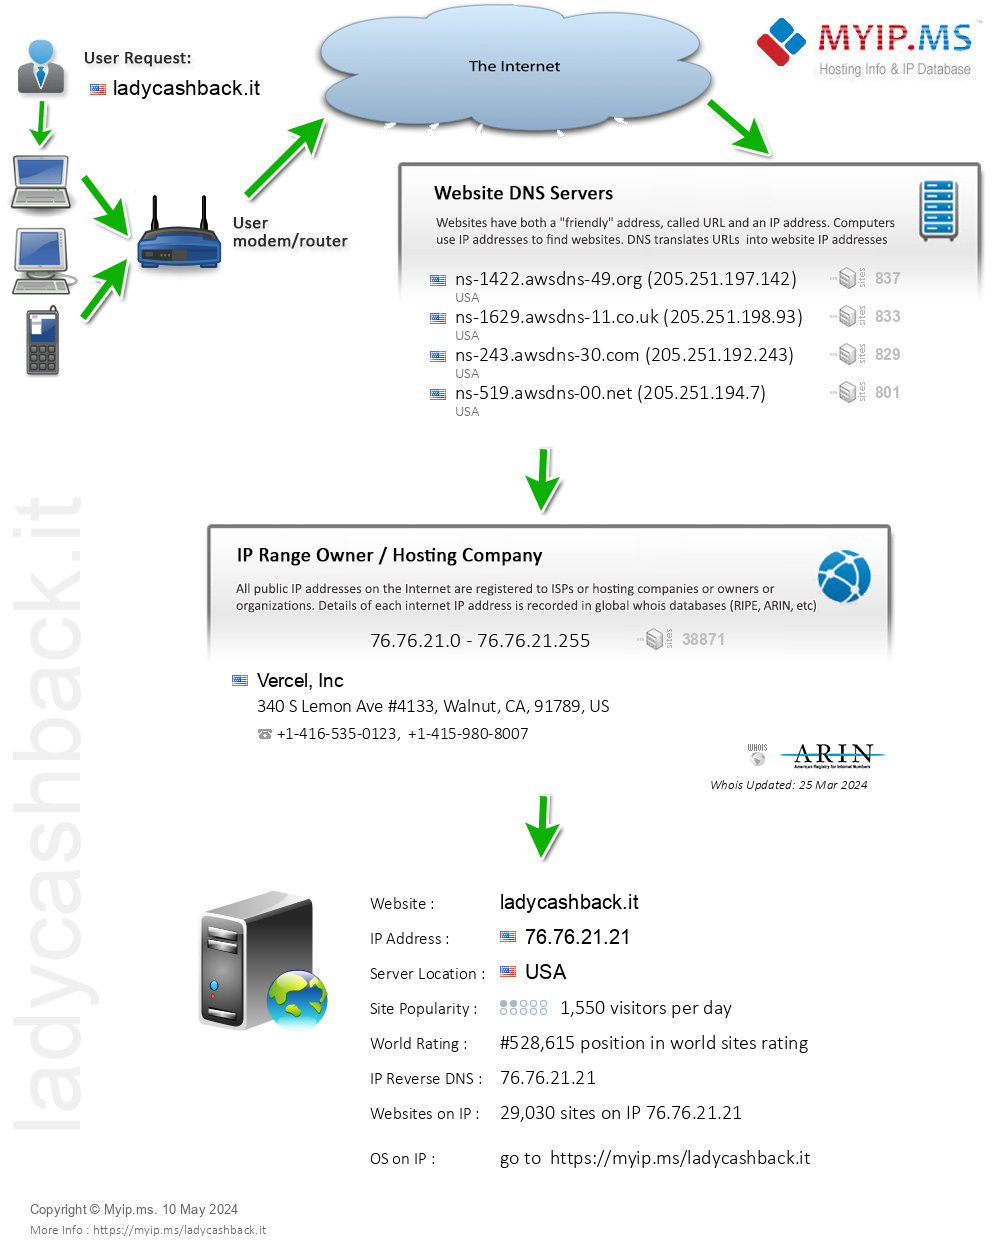 Ladycashback.it - Website Hosting Visual IP Diagram